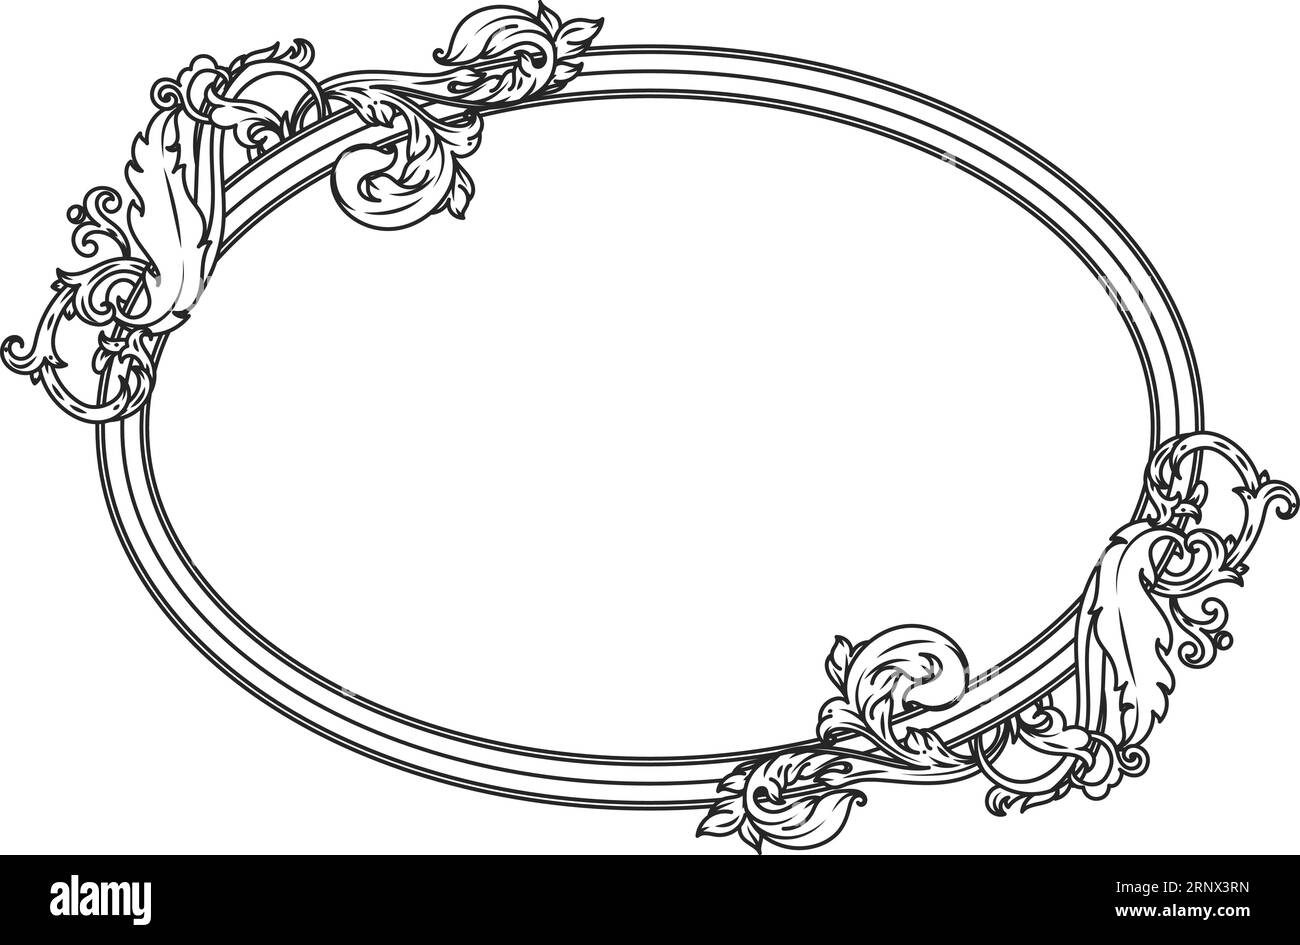 Decorative oval frame with vinatge filigree engraving Stock Vector